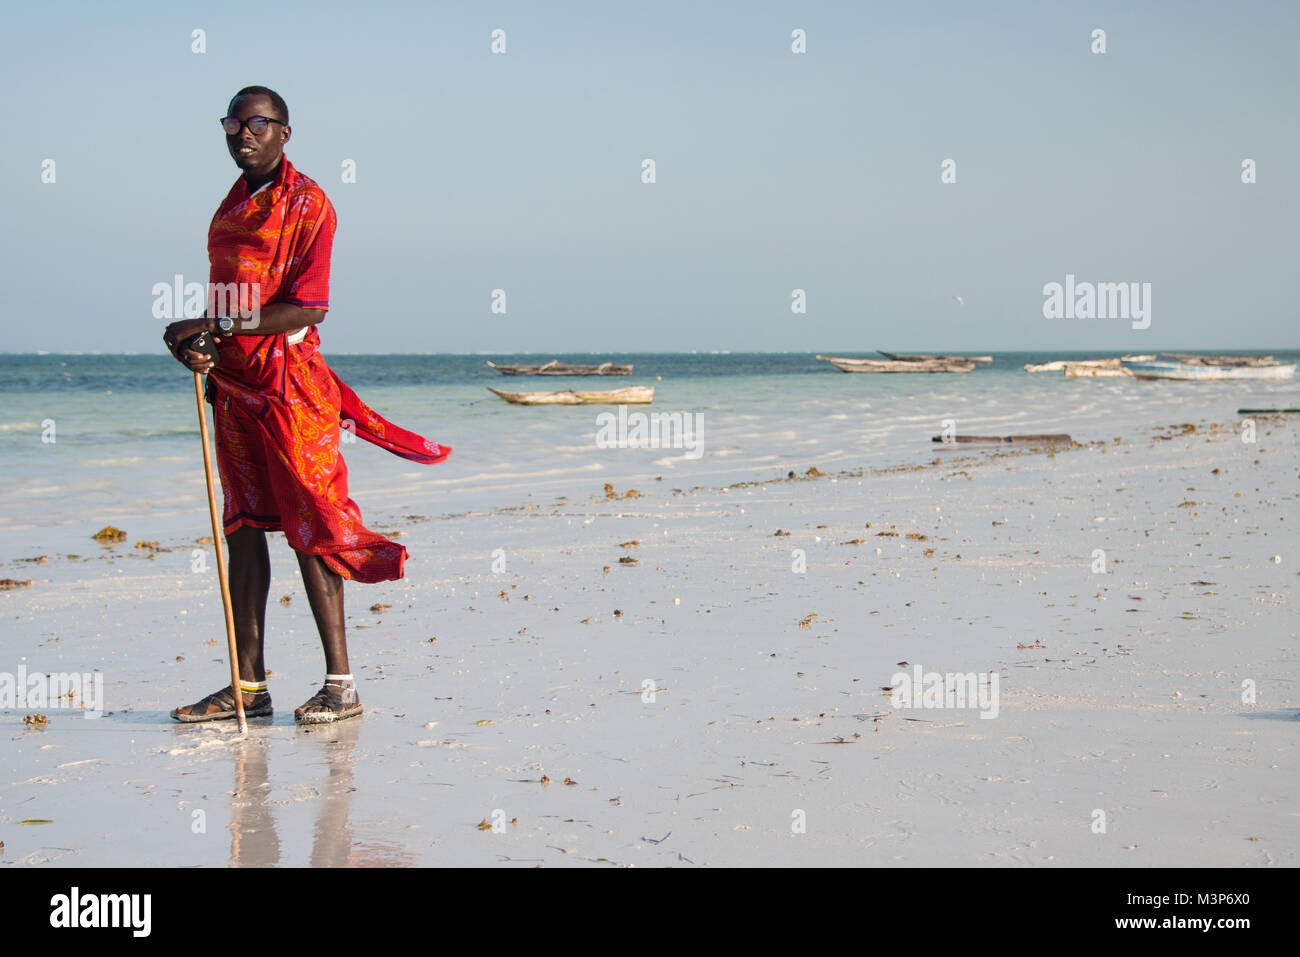 KIWENGWA, ZANZIBAR - DEC 27, 2017: Portrait of Masai man in traditional clothes posing on the beach, Kiwengwa, Zanzibar Stock Photo